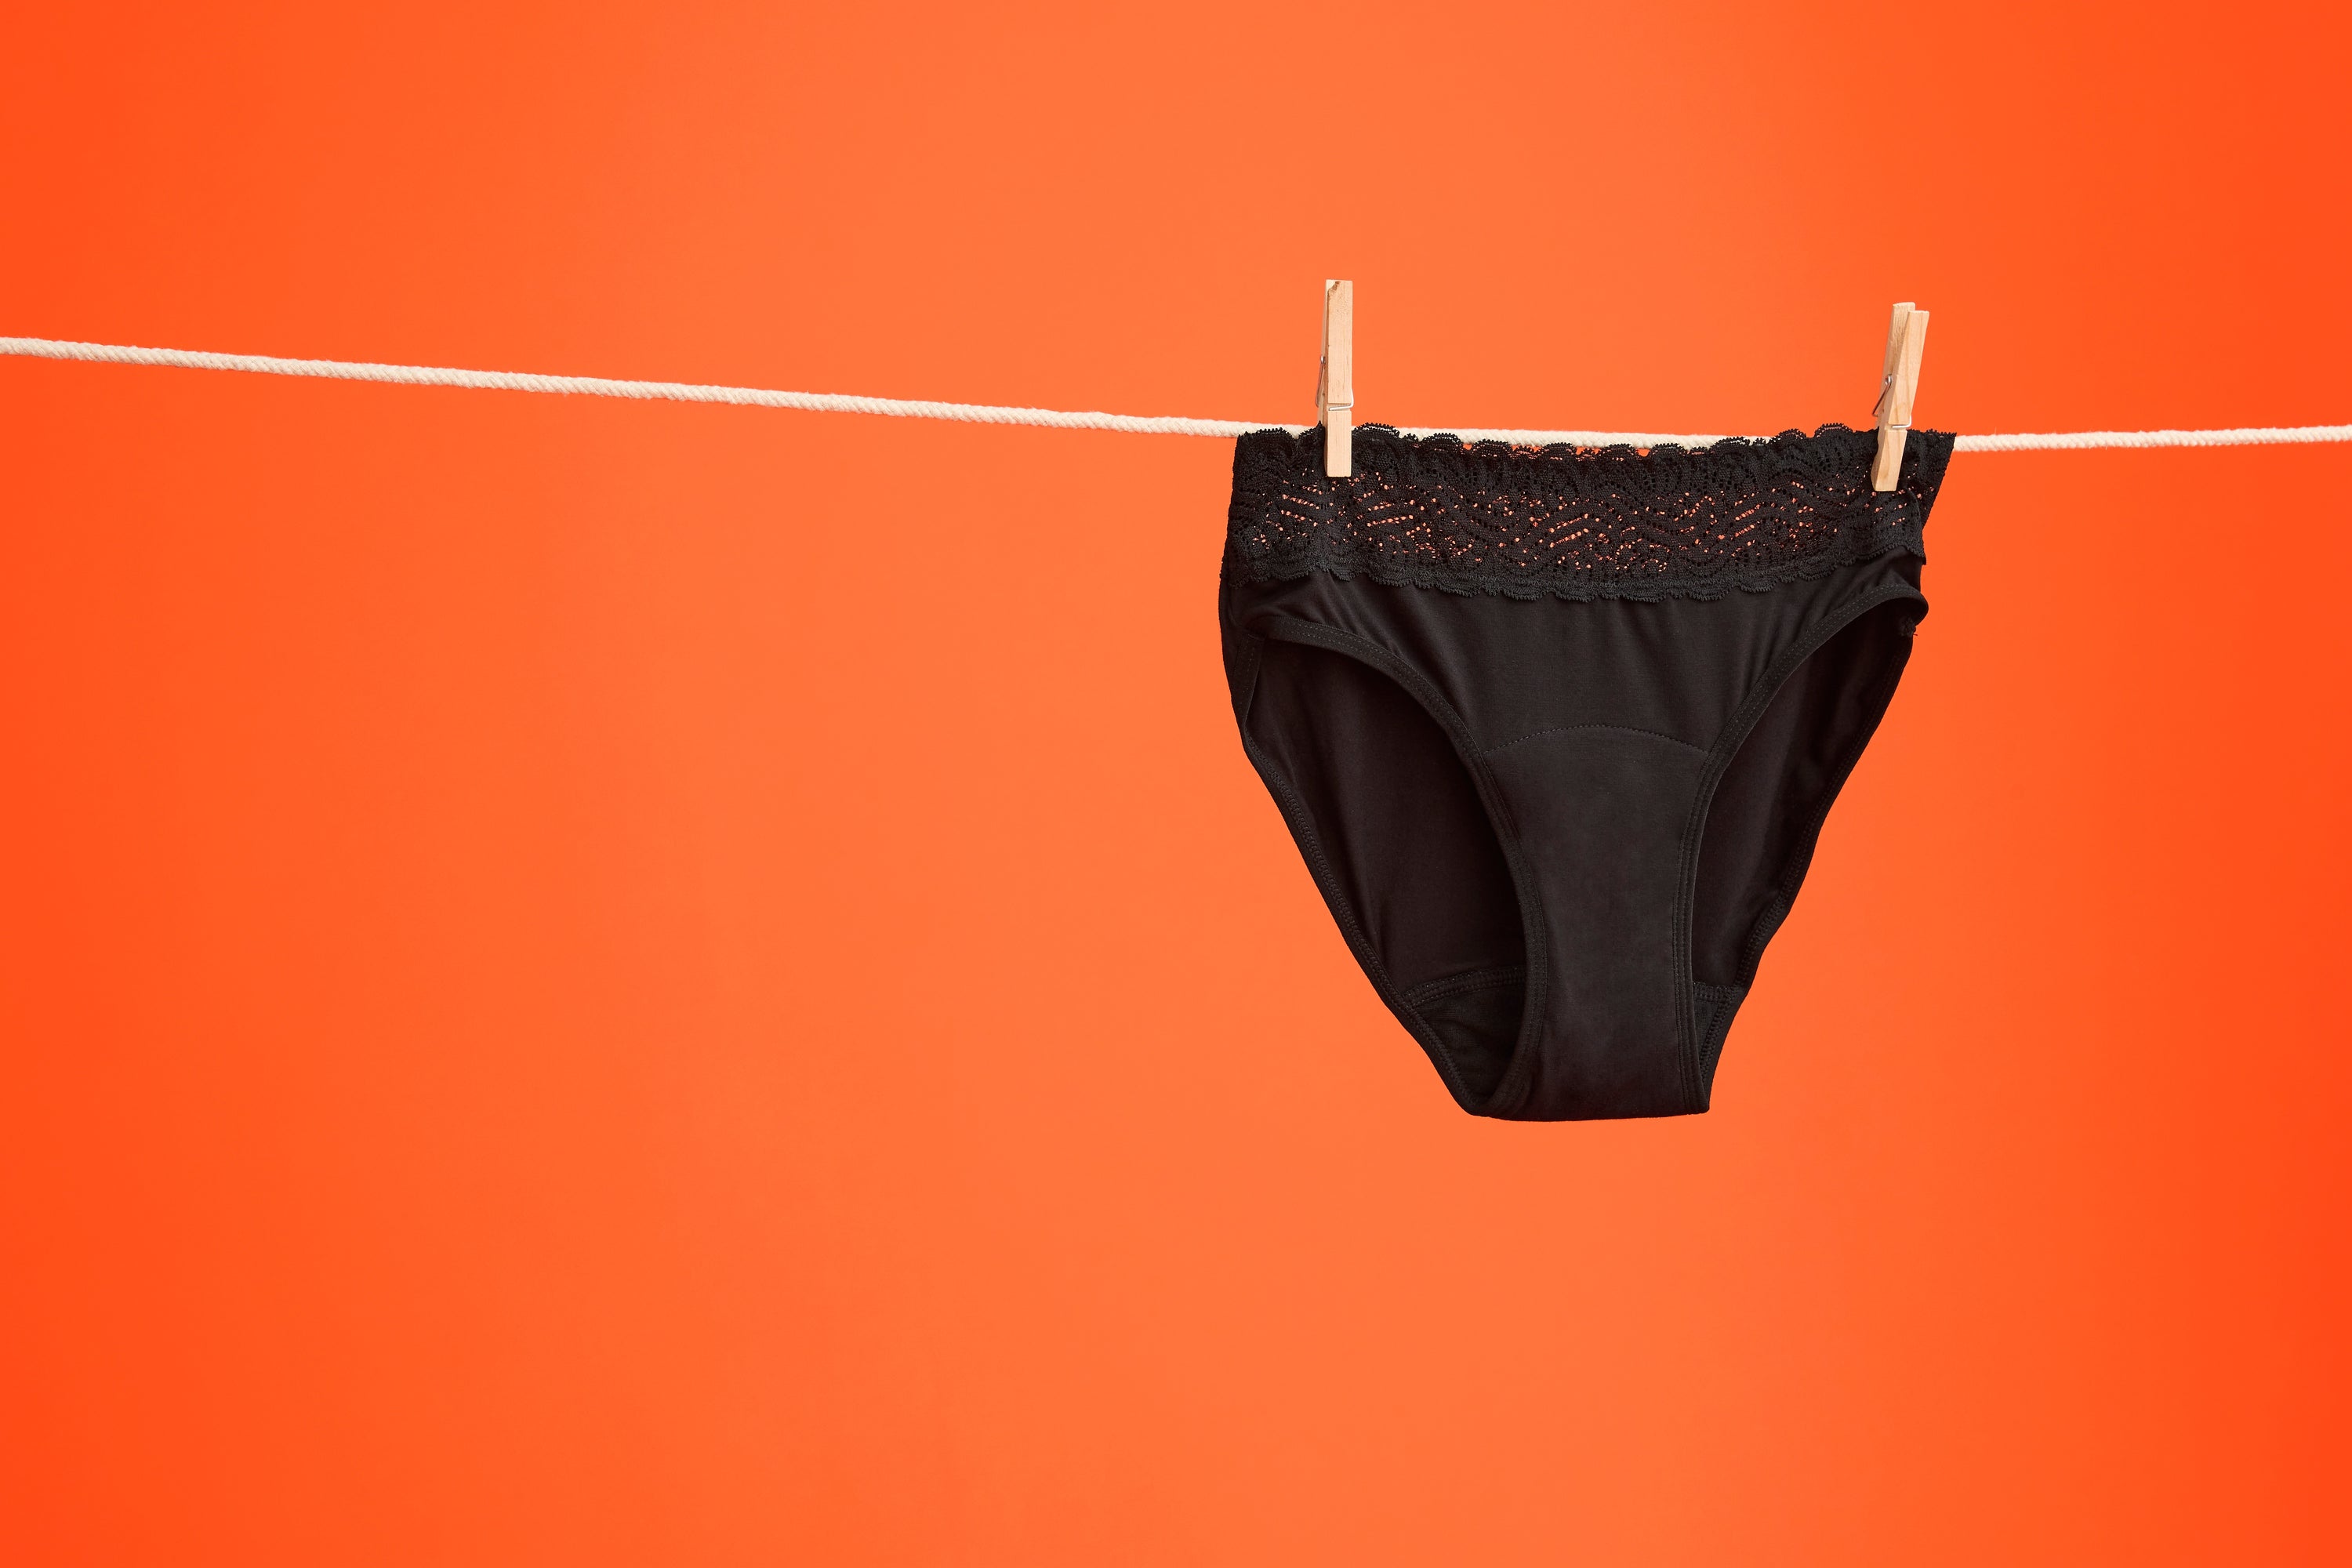 waterproof underwear period - Buy waterproof underwear period at Best Price  in Malaysia